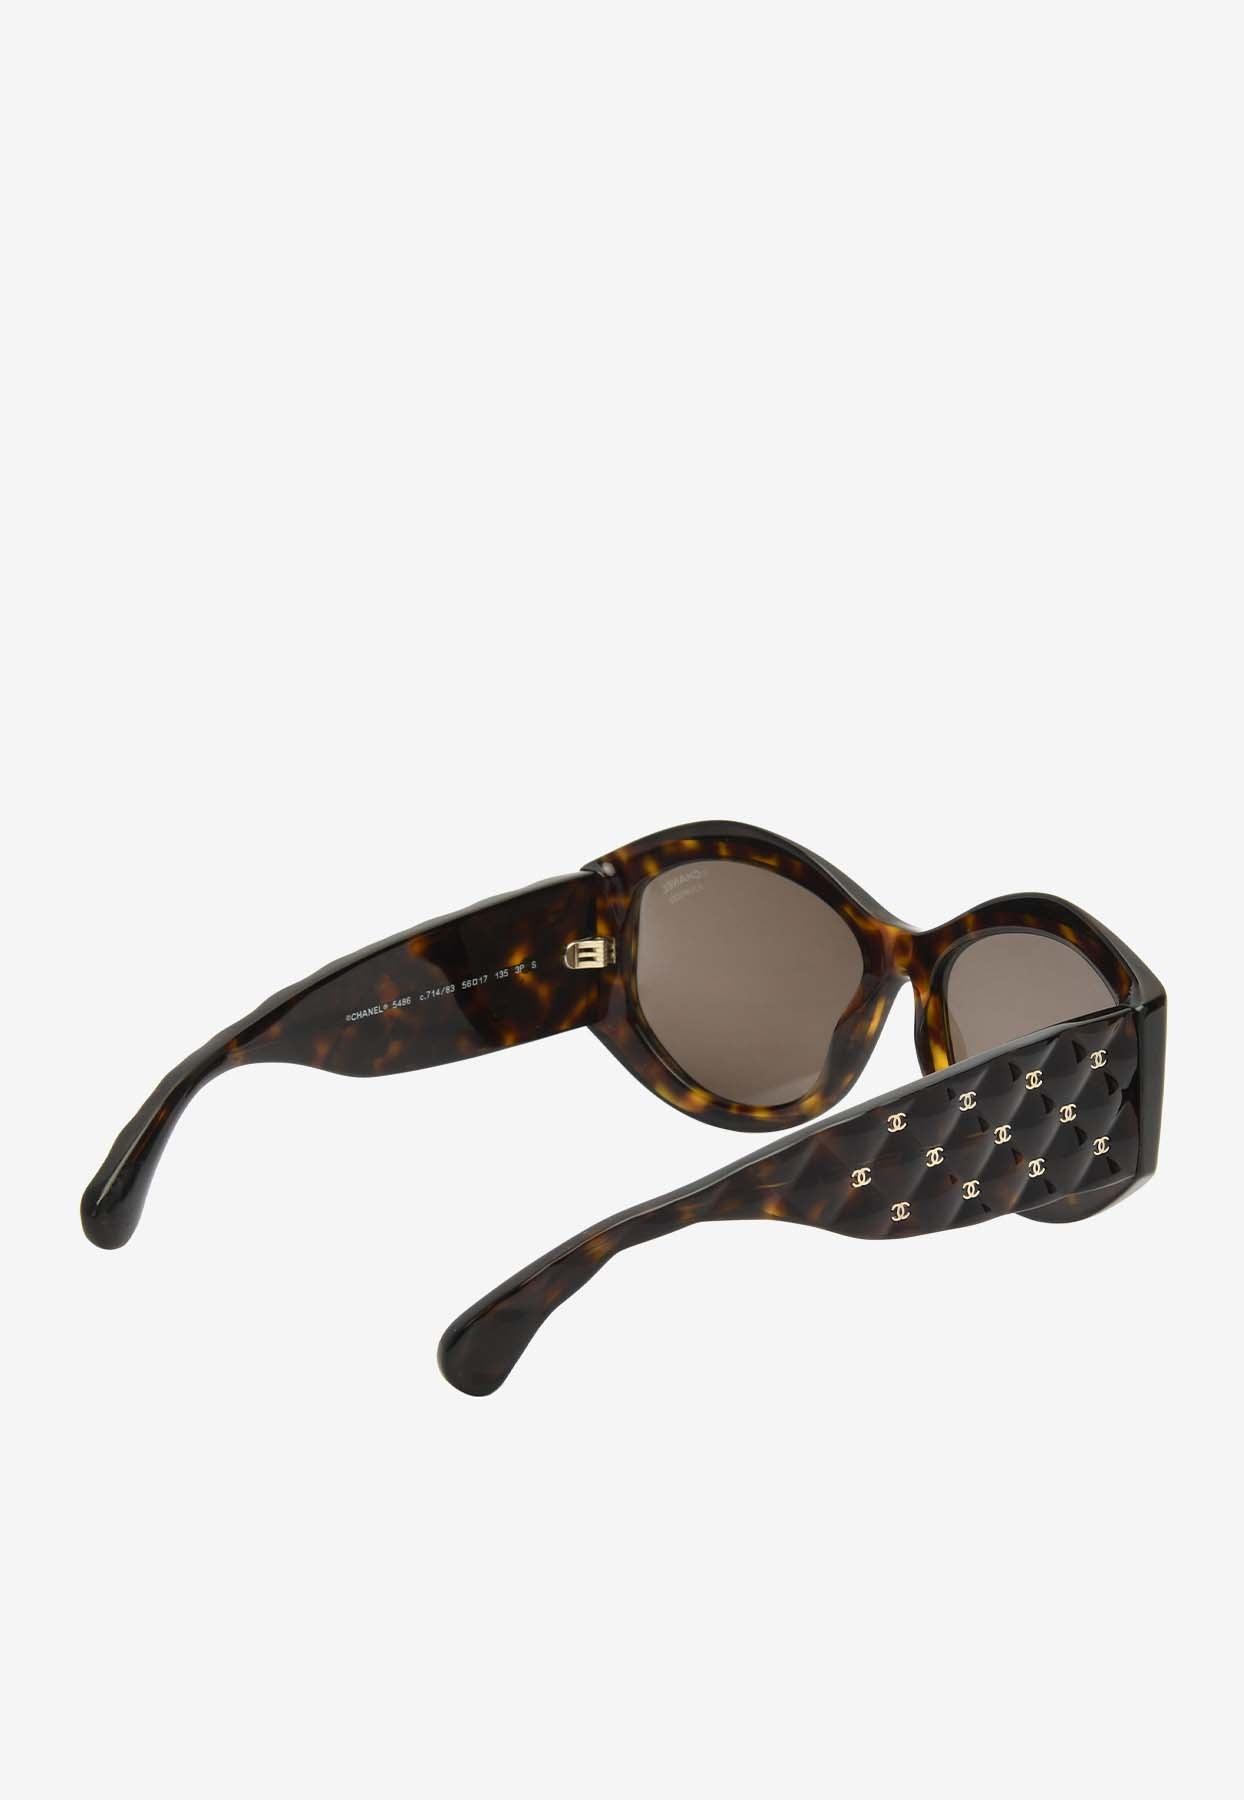 CHANEL 5486 Oval Sunglasses